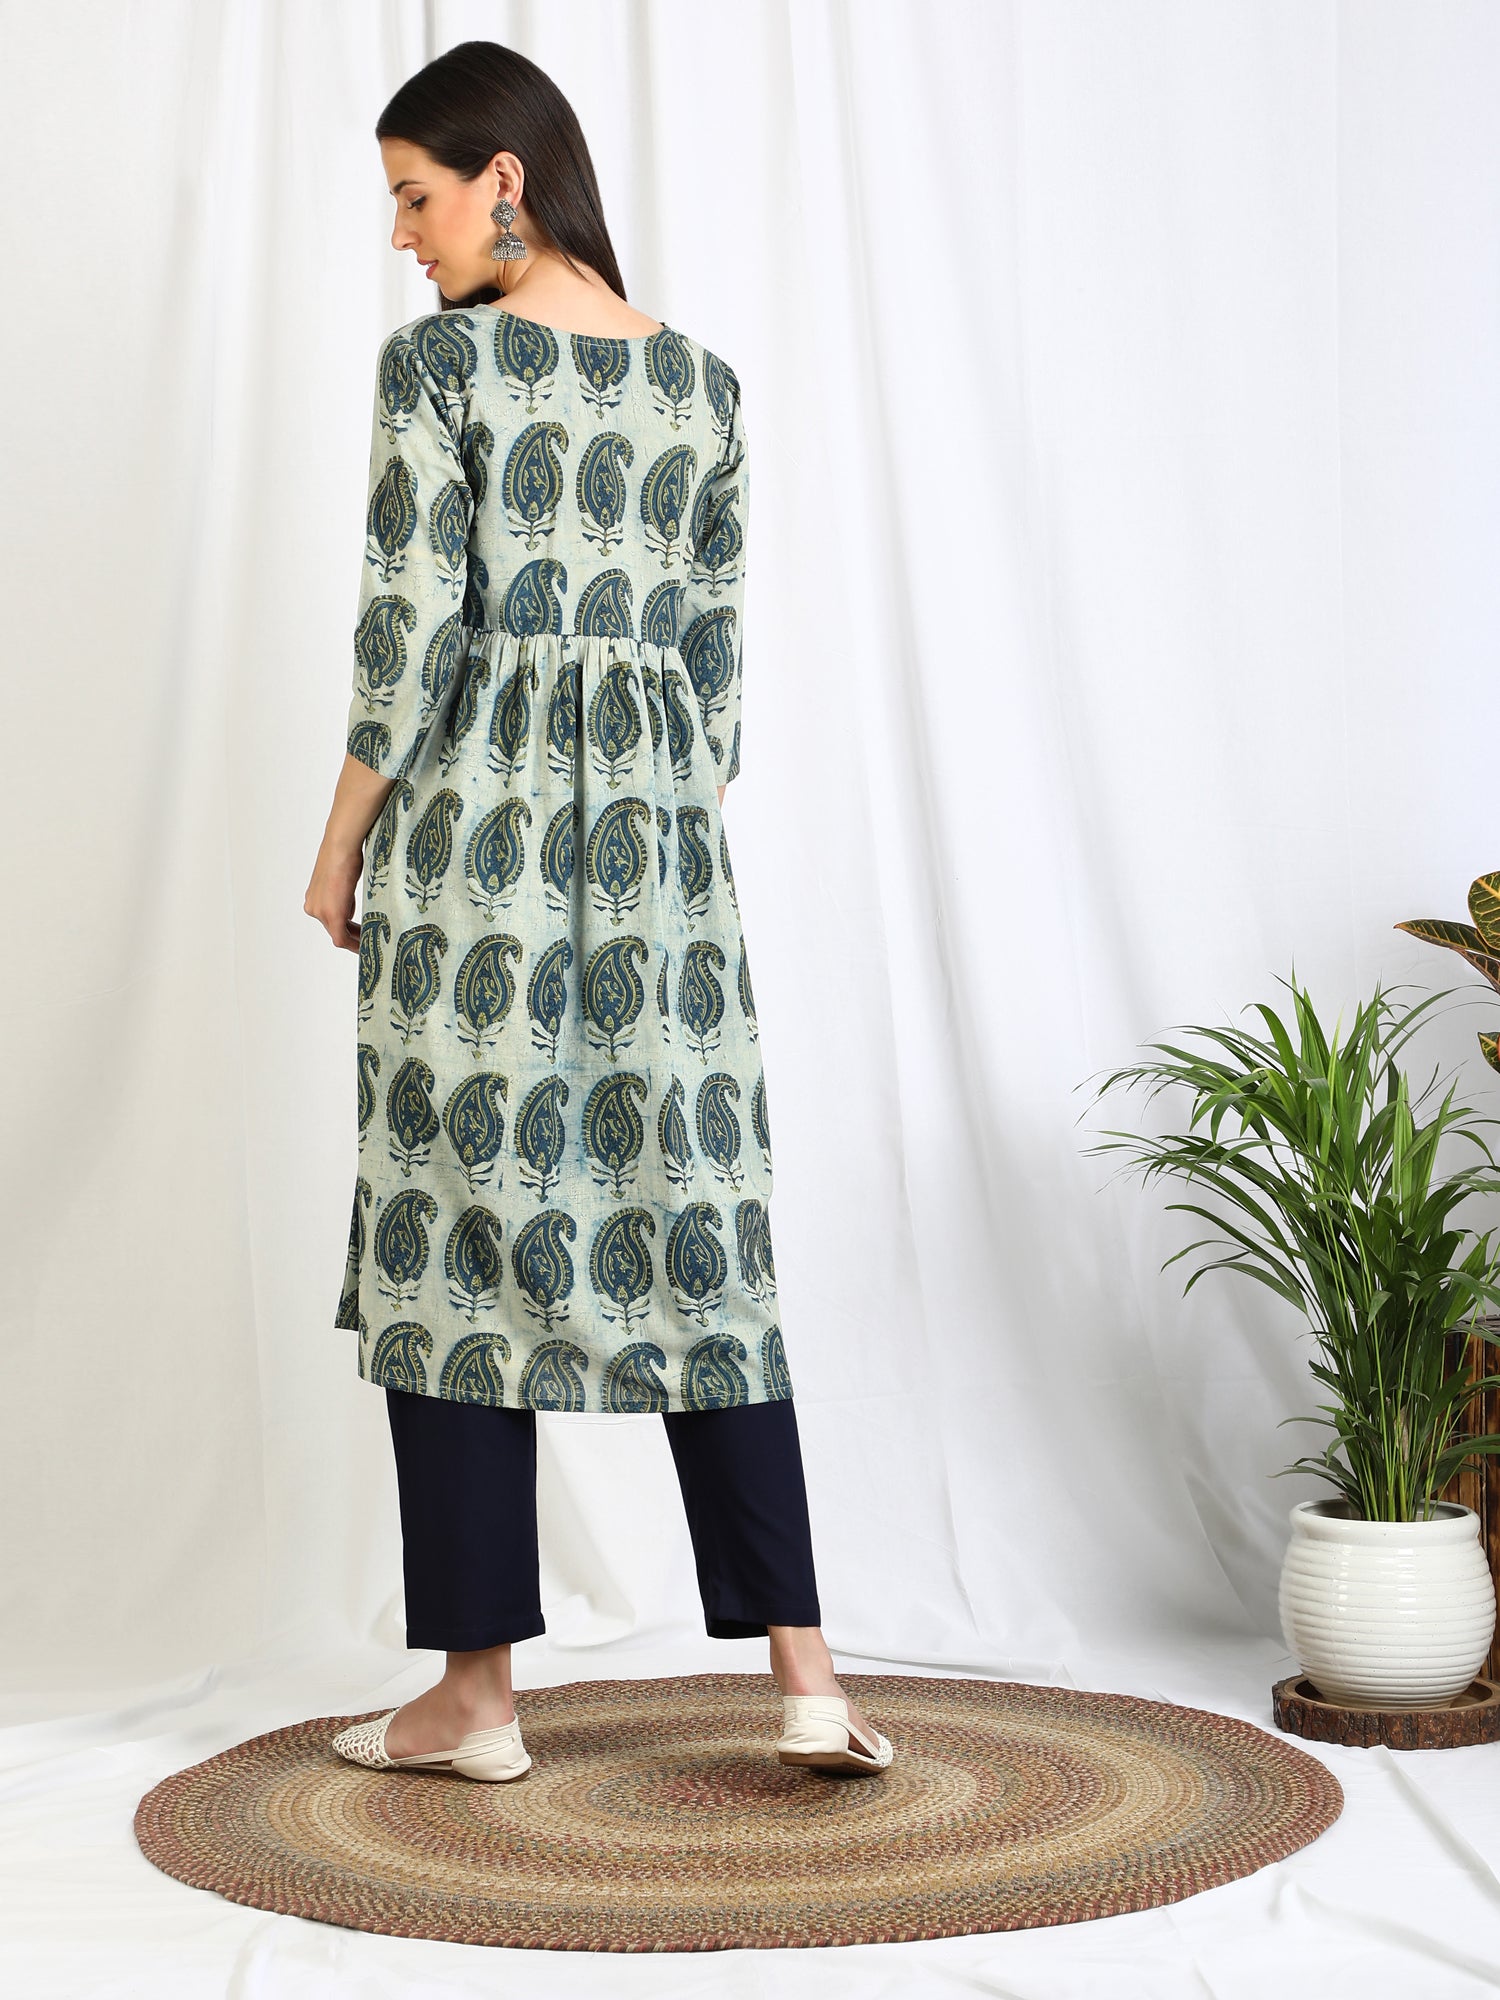 PLUS size Kurtis(XS-5XL) : starting ₹535/- free COD WhatsApp +919730930485  | Sleeves designs for dresses, Designs for dresses, Long dress design